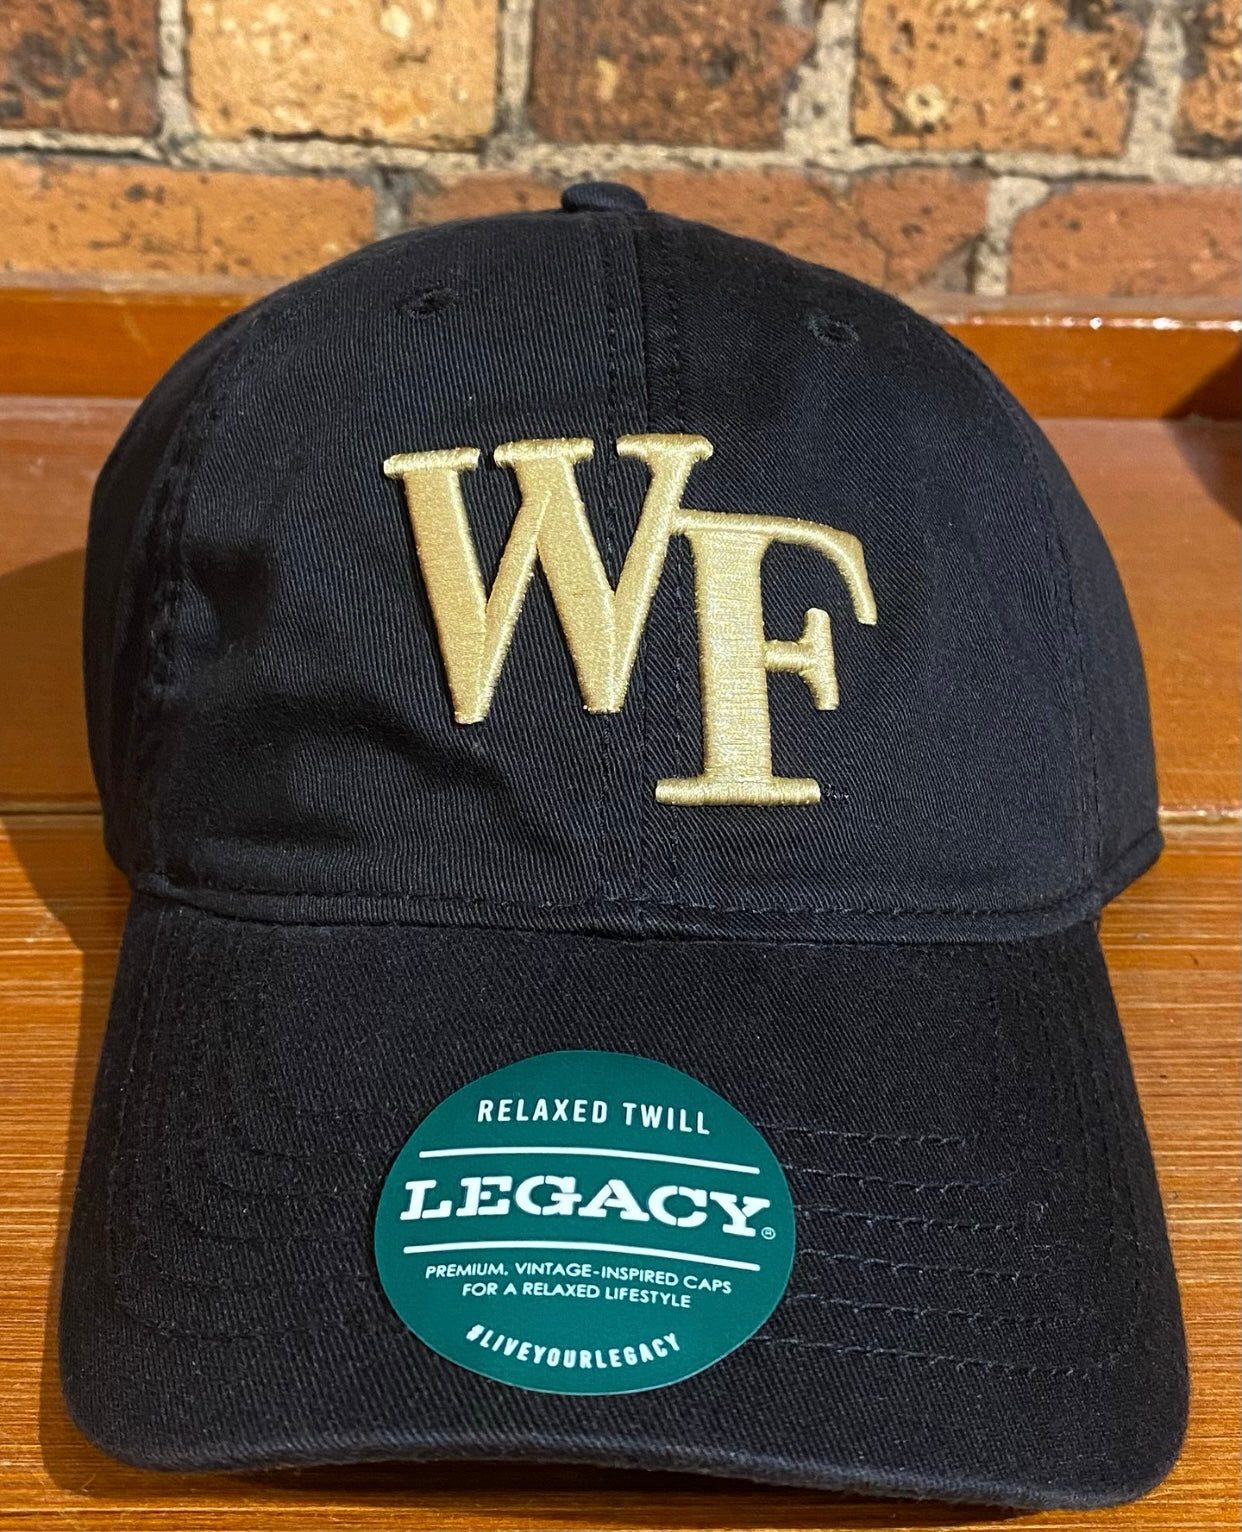 Wake Forest 'WF' Hat - Legacy